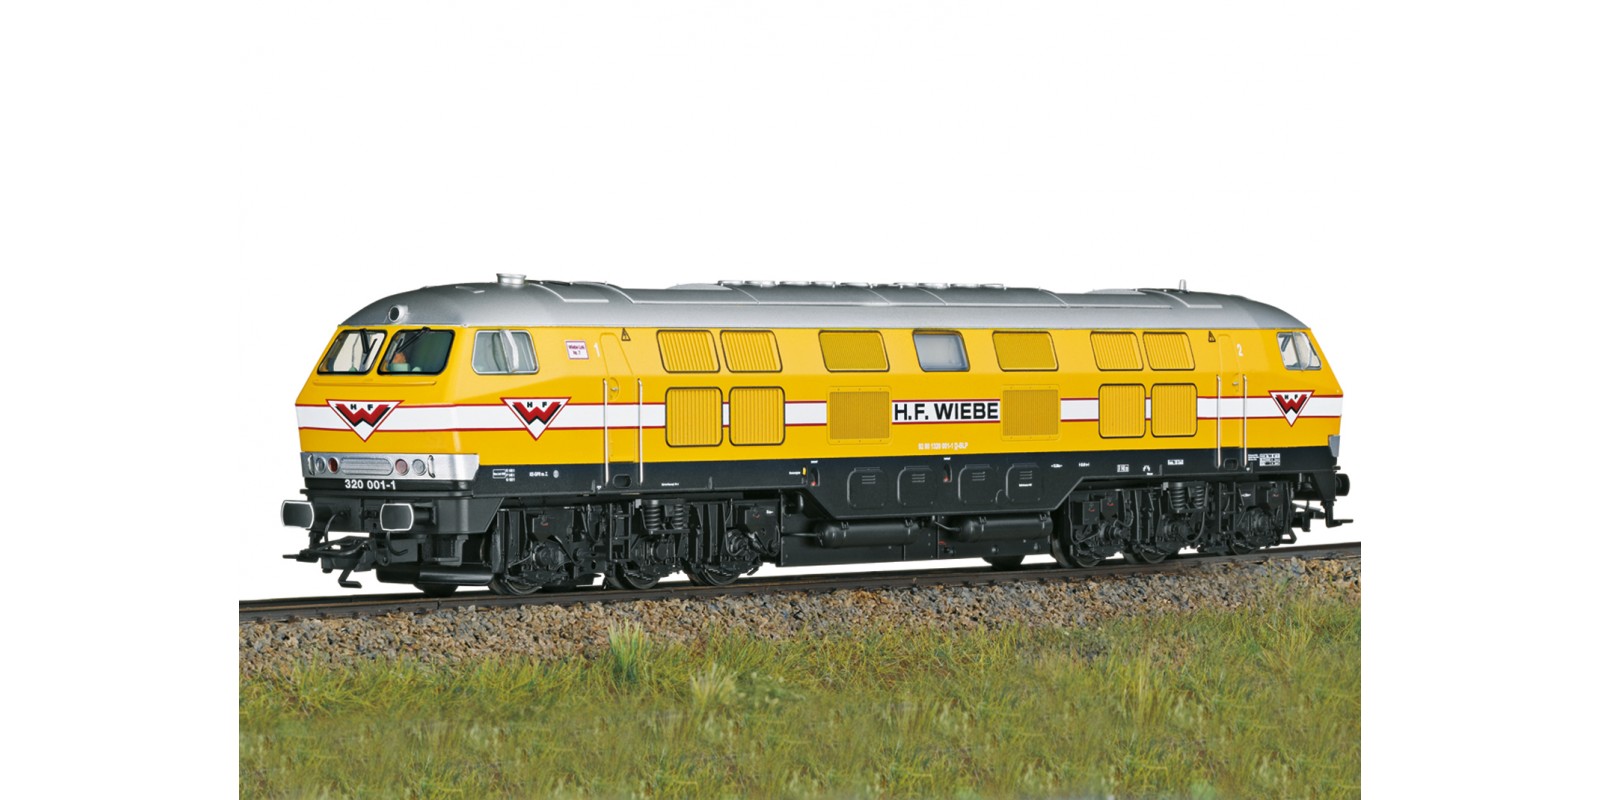 T22434 Class V 320 Diesel Locomotive